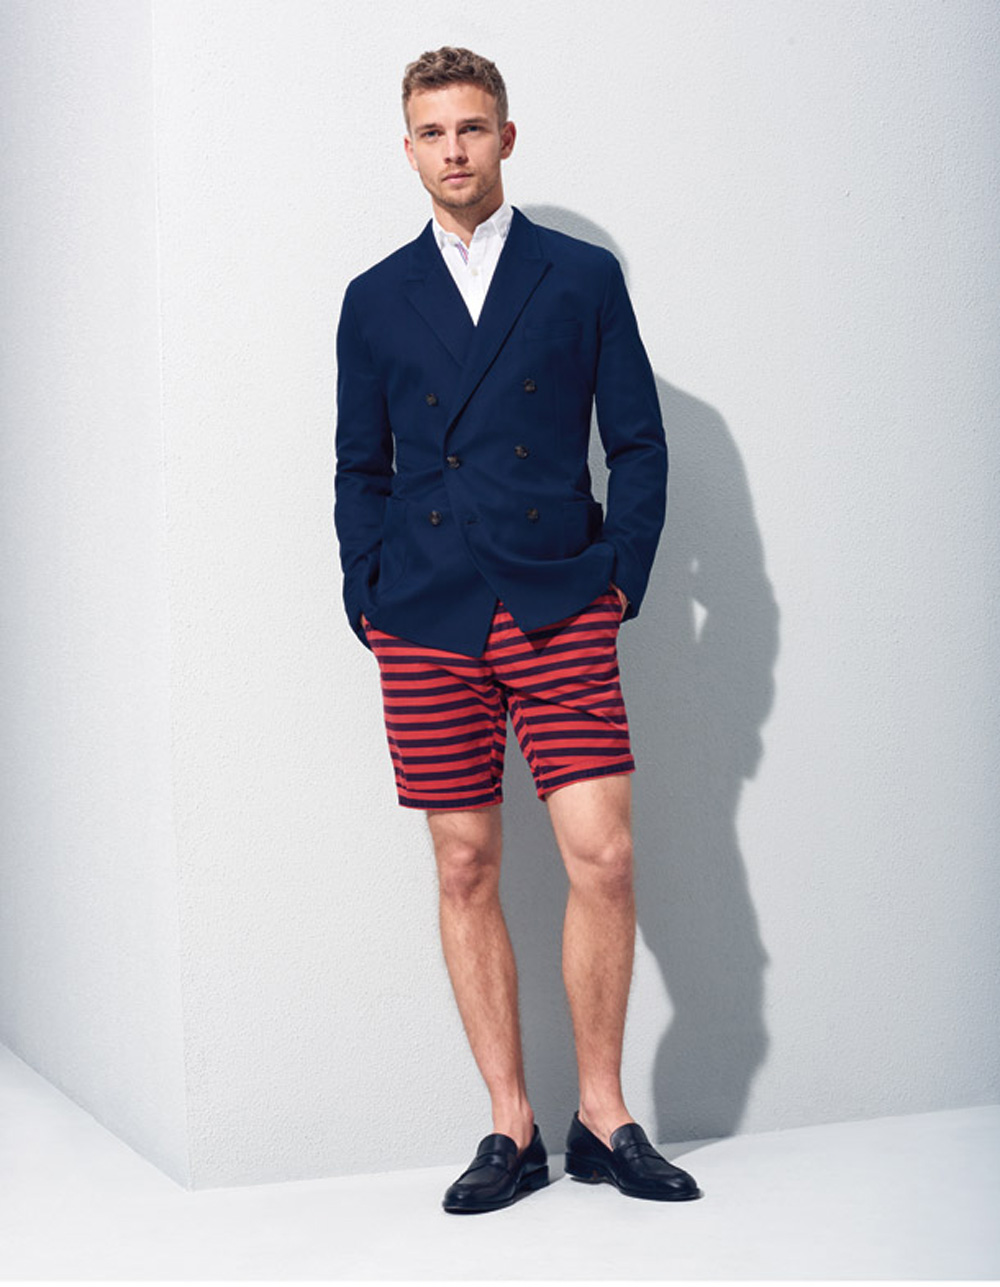 Tommy Hilfiger Spring/Summer 2016 Lookbook - Fashionably Male